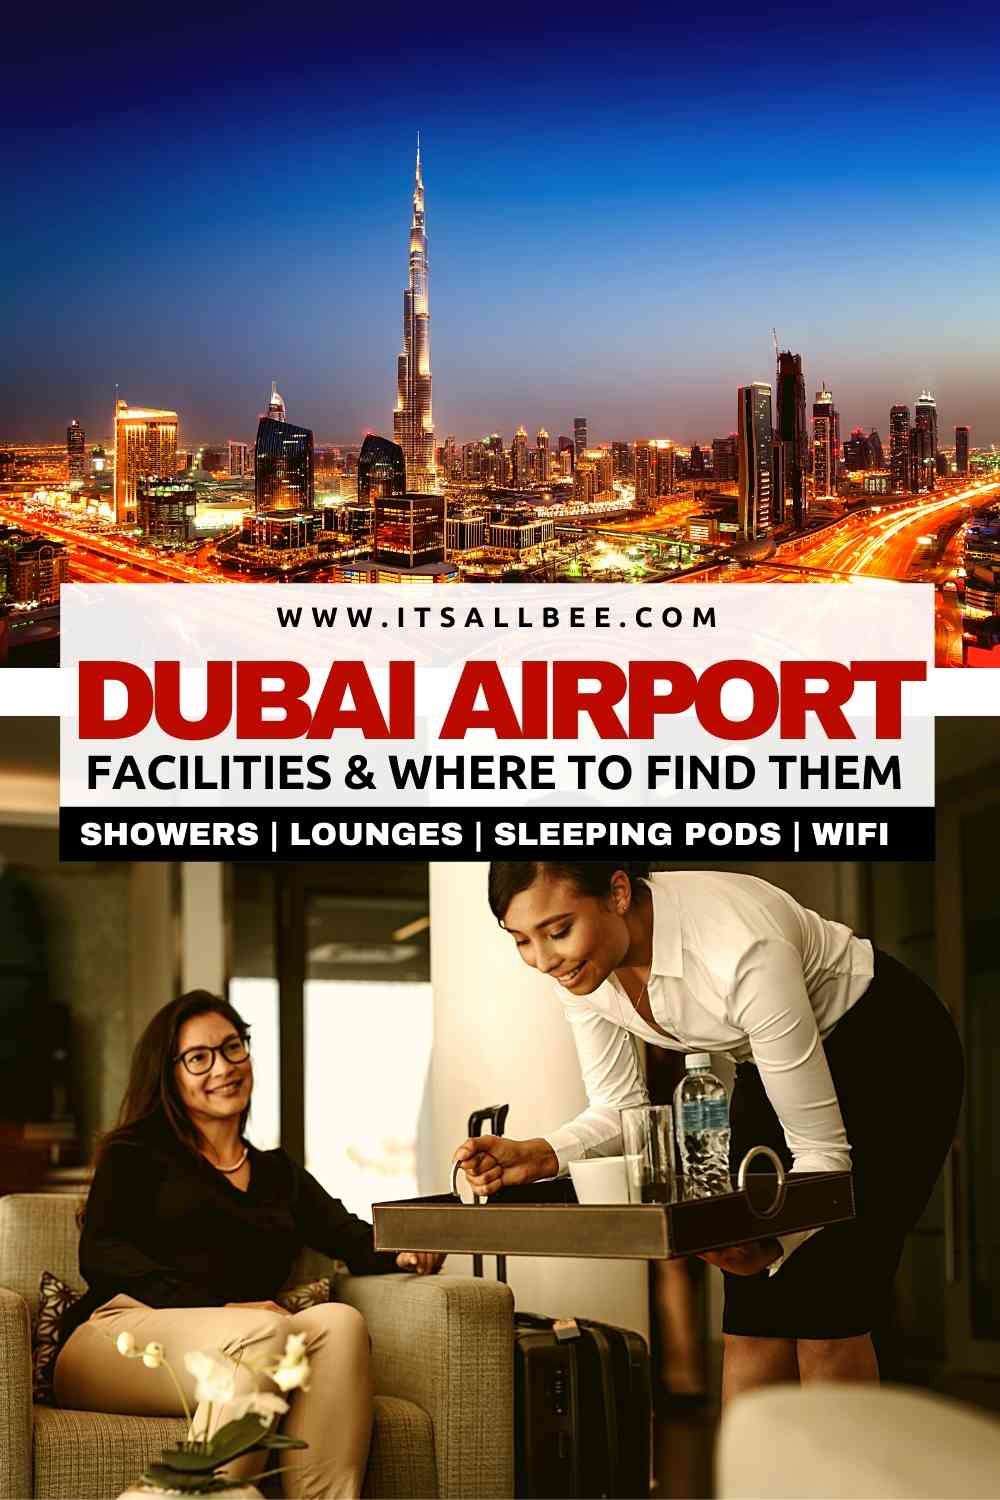 Dubai airport showers and facilities